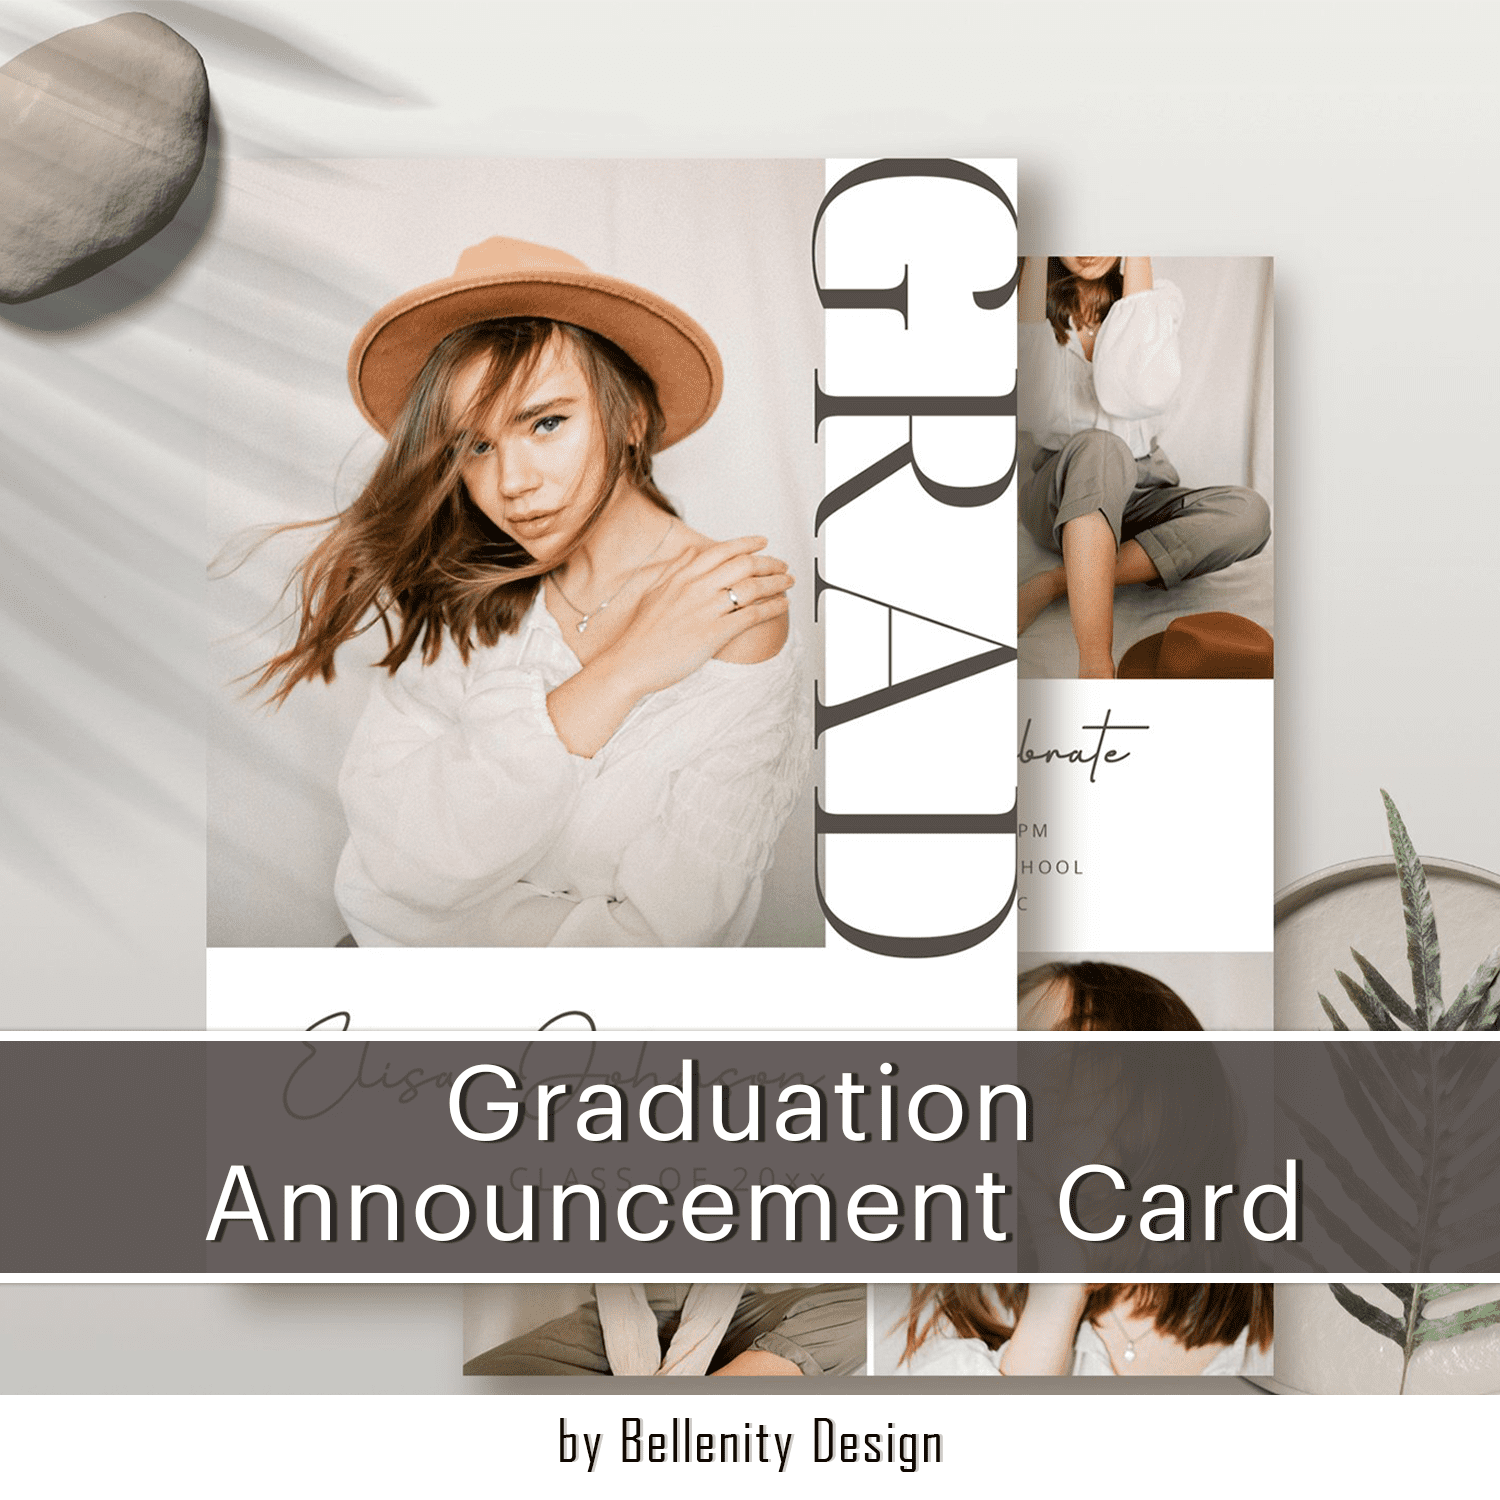 Graduation Announcement Card SG015 cover.